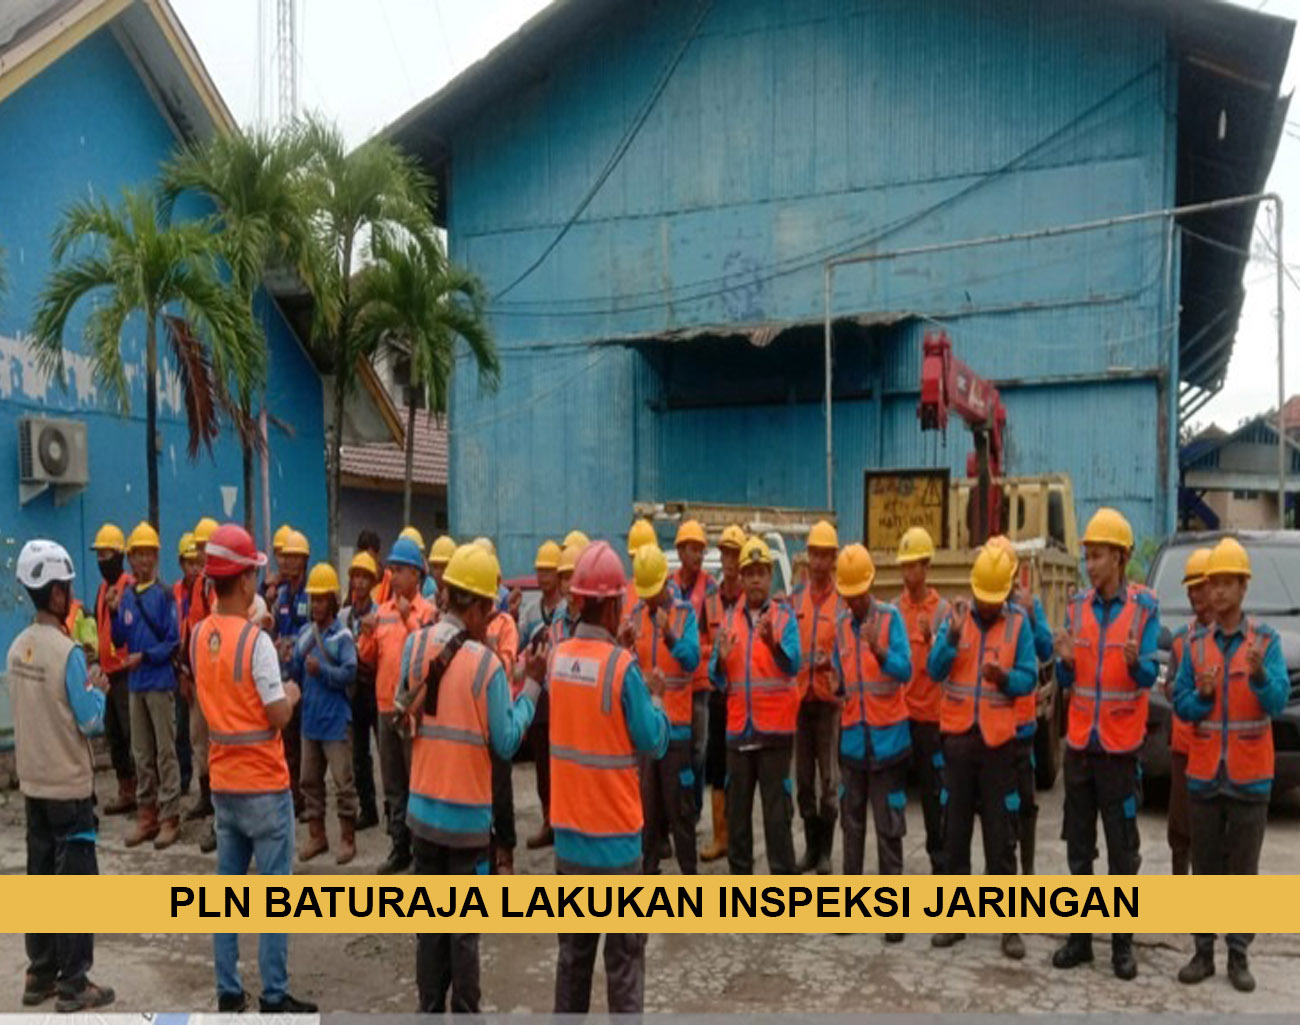 PLN Baturaja Lakukan Inspeksi Jaringan Tindaklanjuti Laporan Warga di 3 Kecamatan